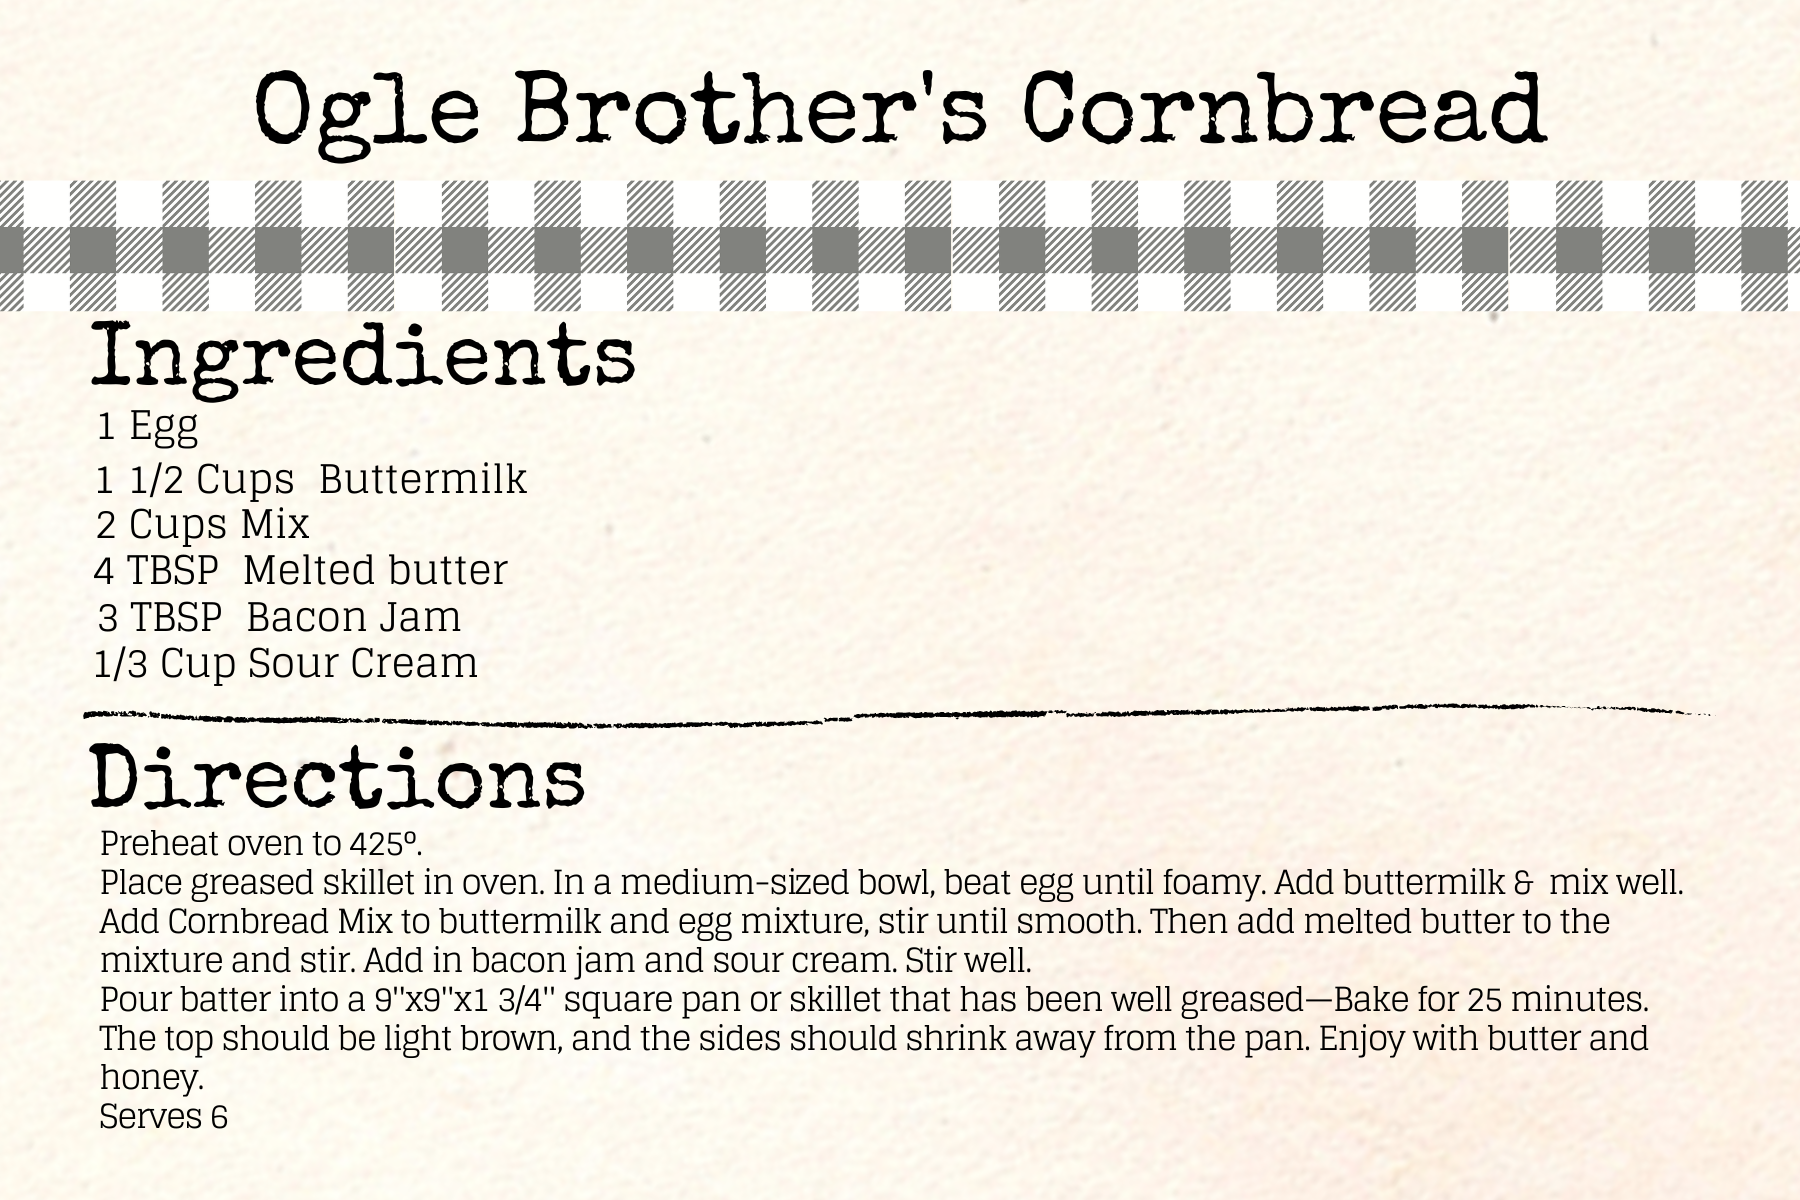 ogle brothers cornbread recipe card